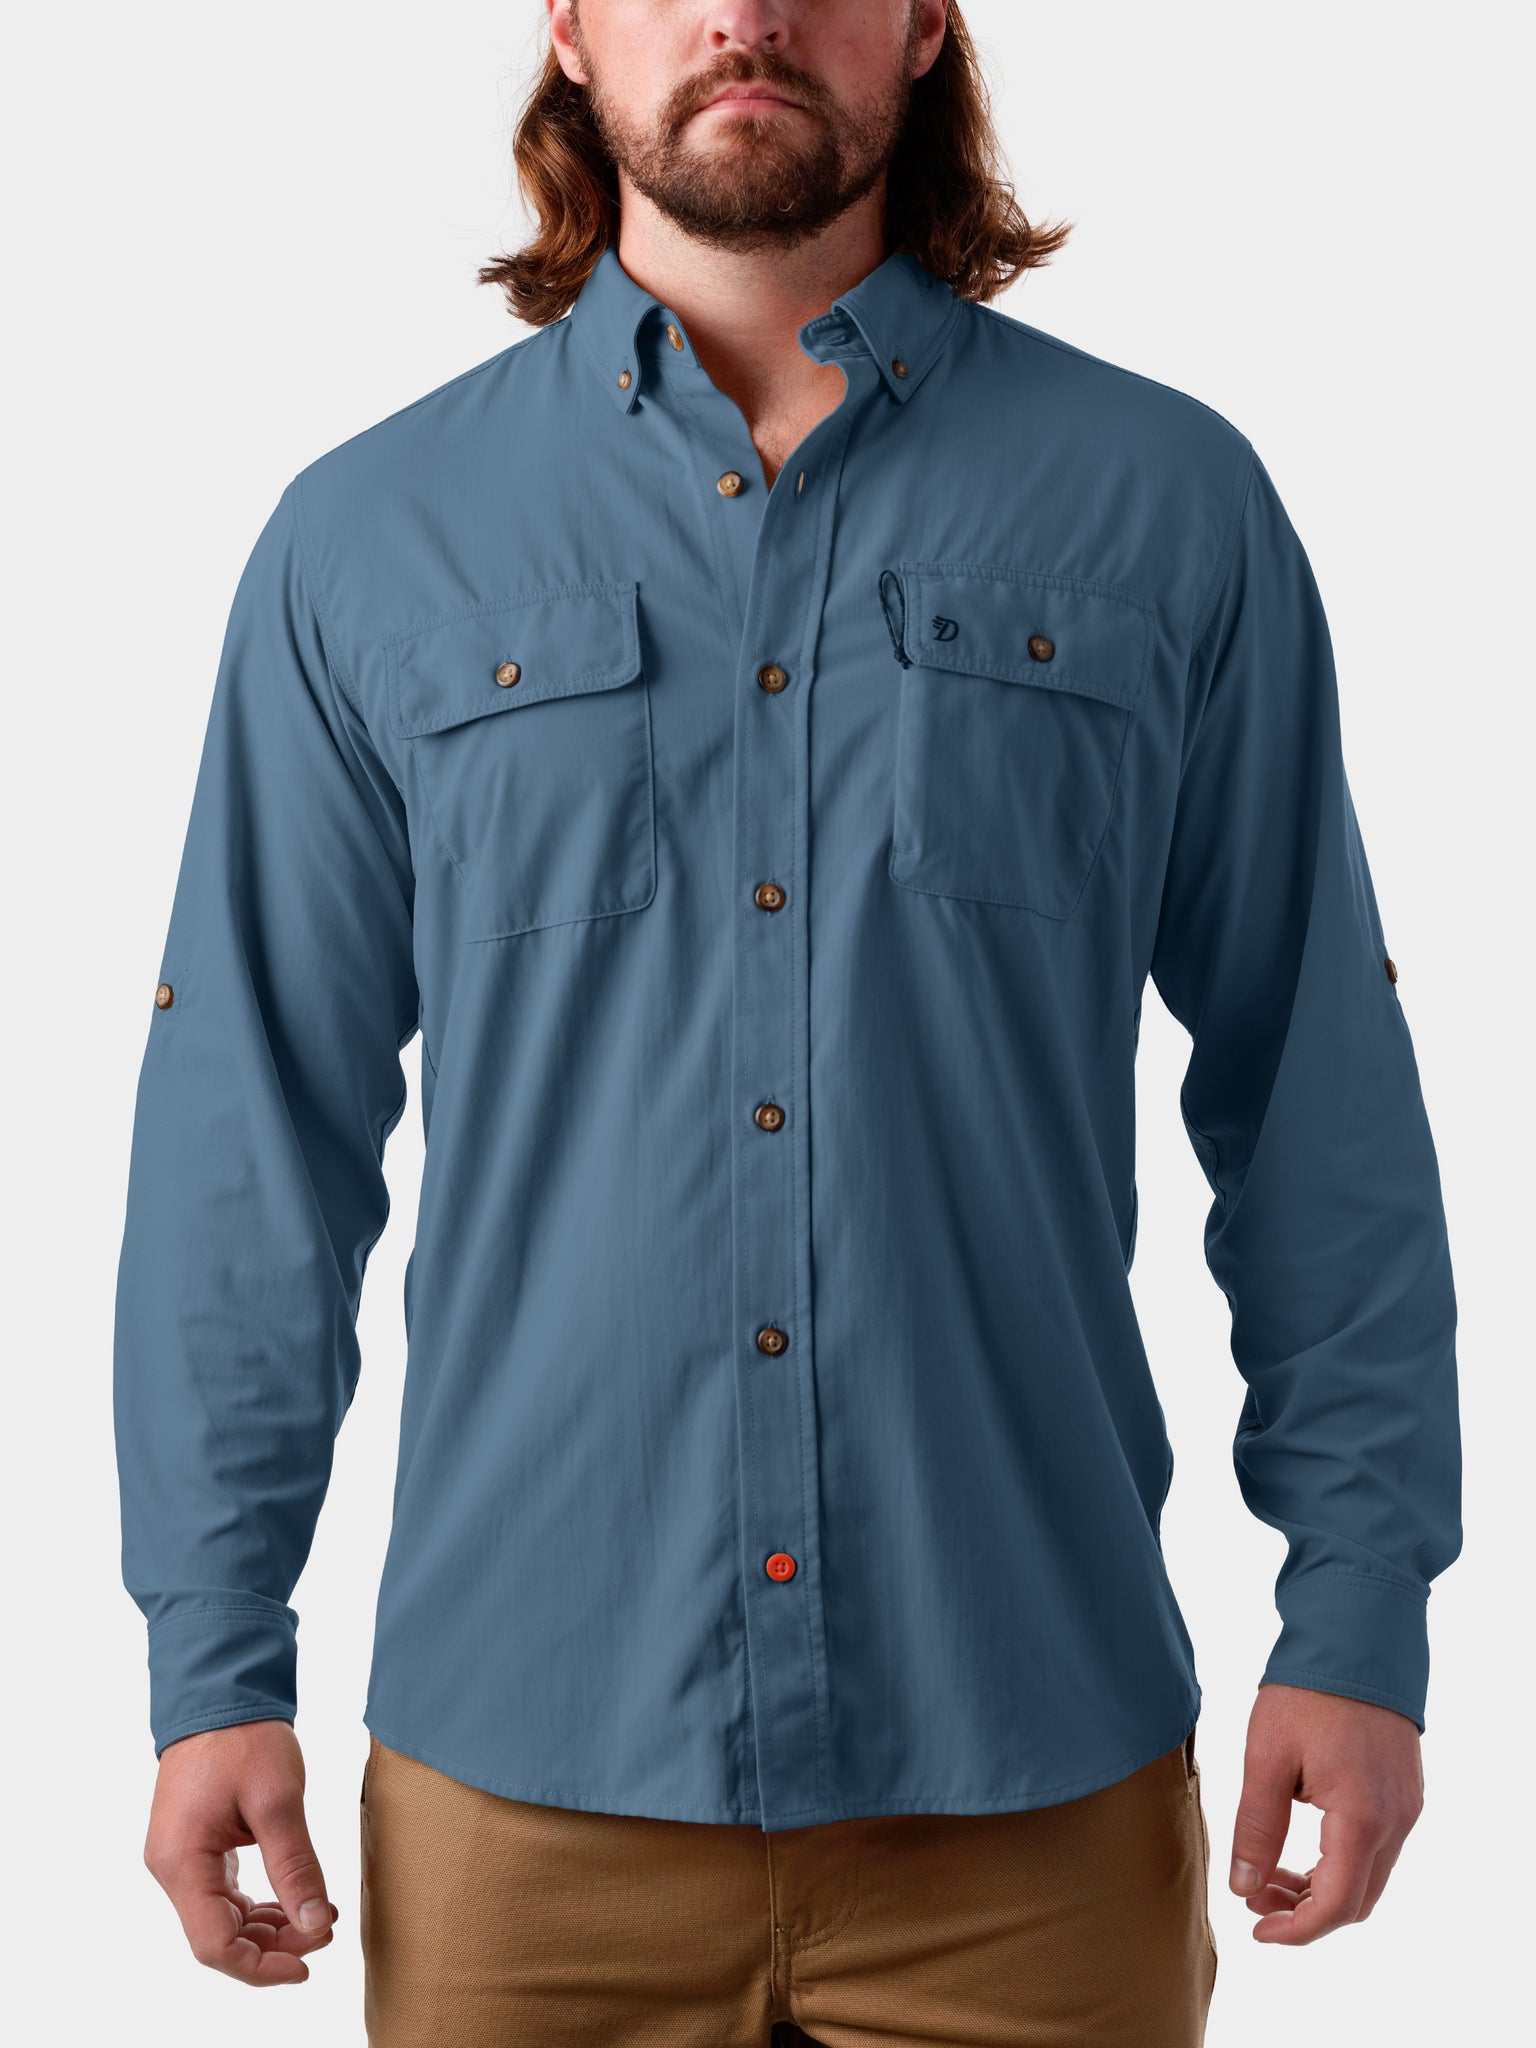 Lightweight Hunting Shirt Long Sleeve - Channel Blue